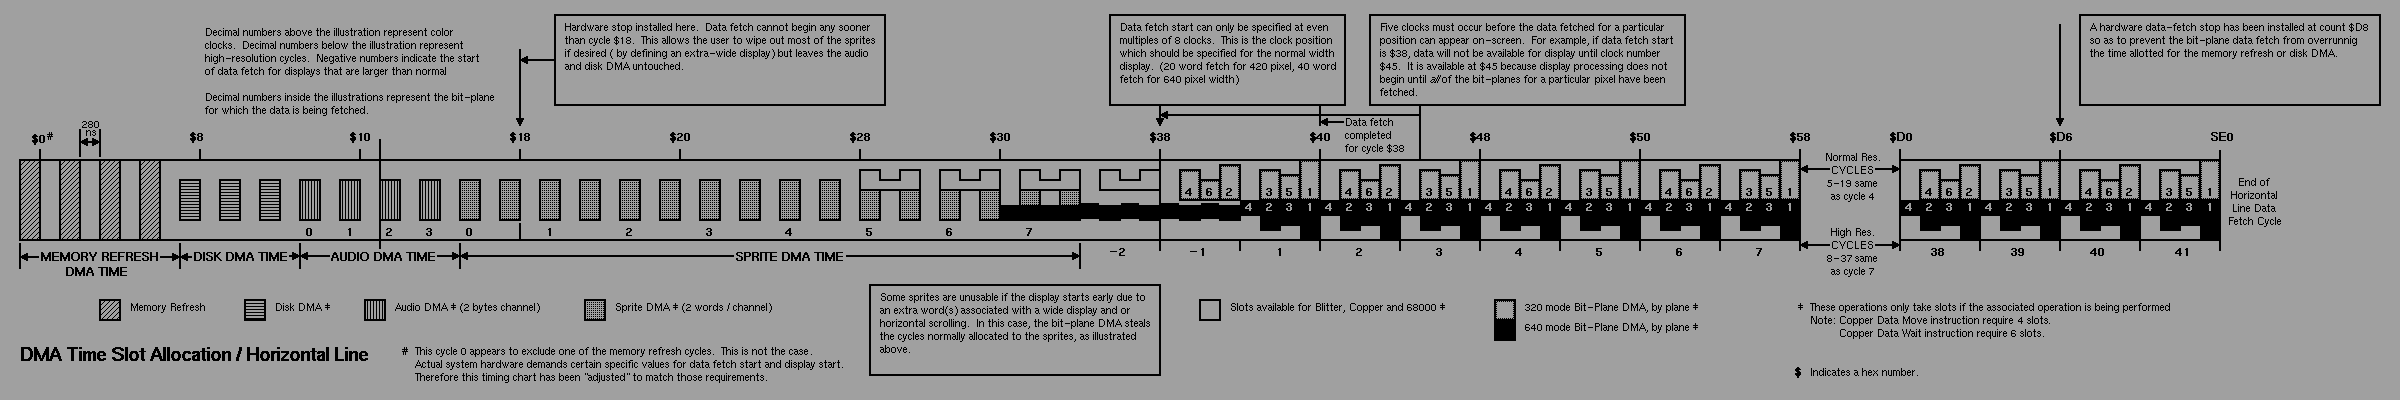  Figure 6-9: DMA Time Slot Allocation 